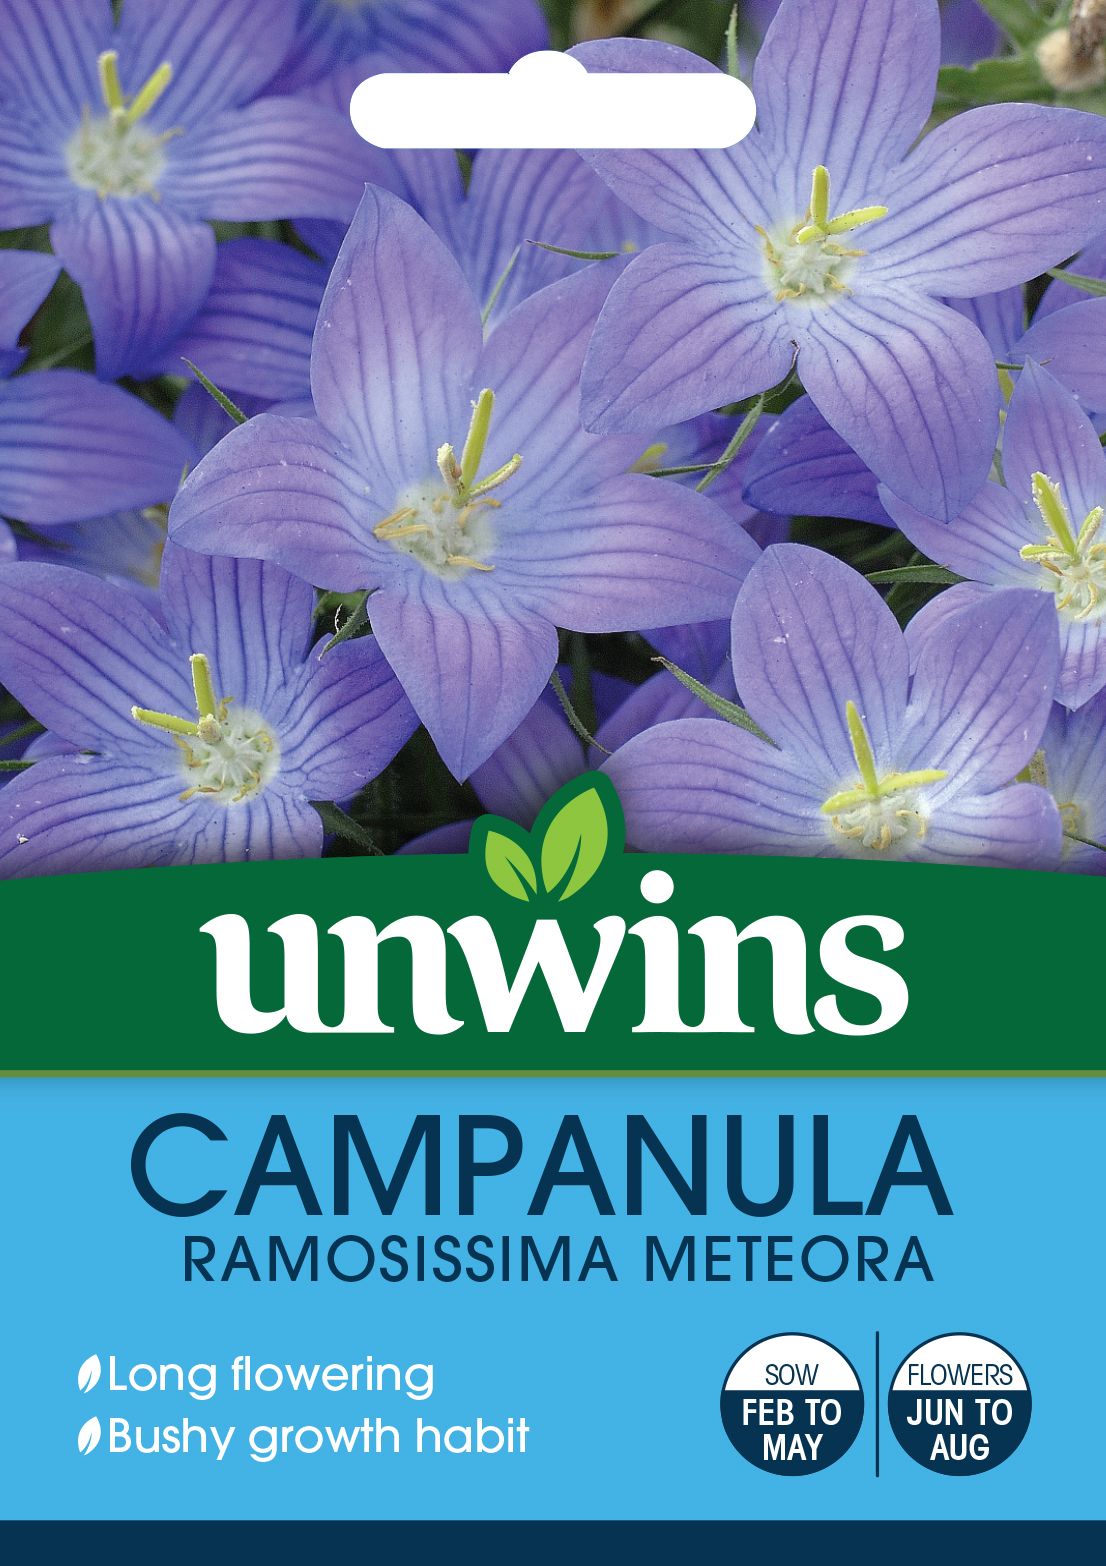 Campanula Ramosissima Meteora